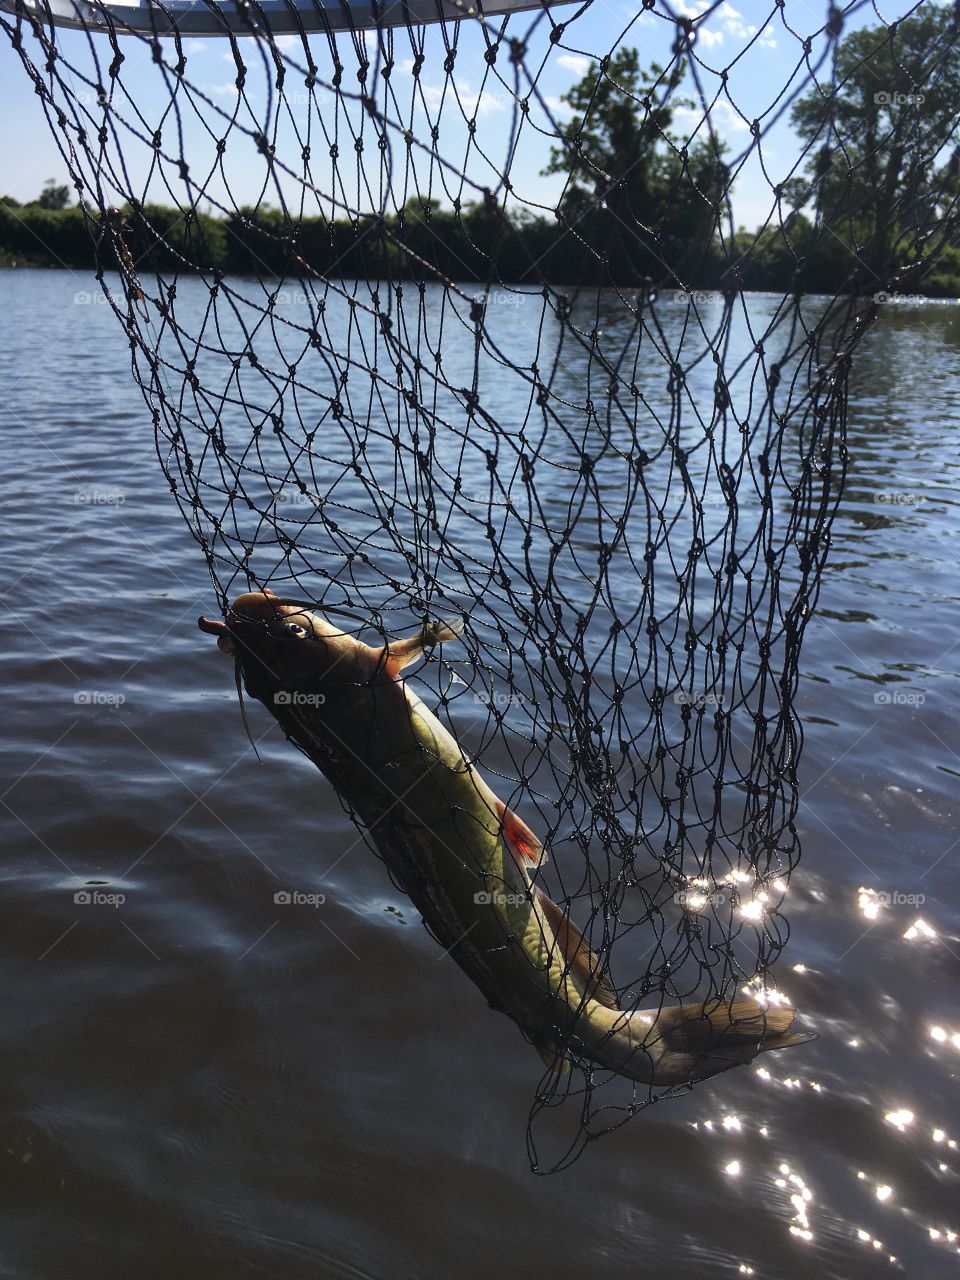 Catfish in the net.